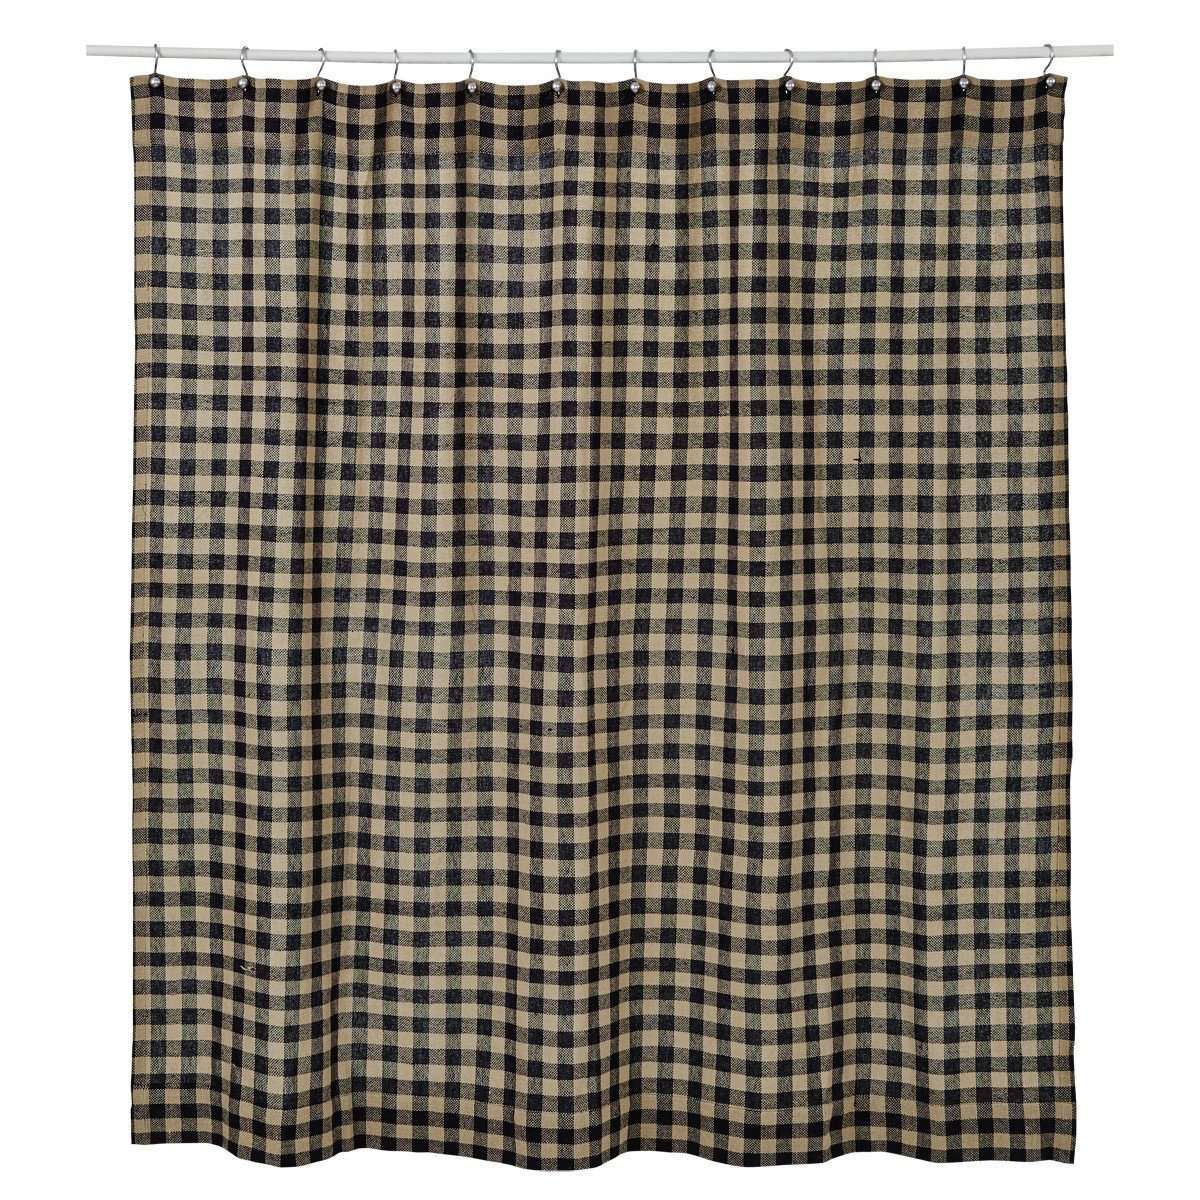 Burlap Black Check Shower Curtain 72"x72" curtain VHC Brands 